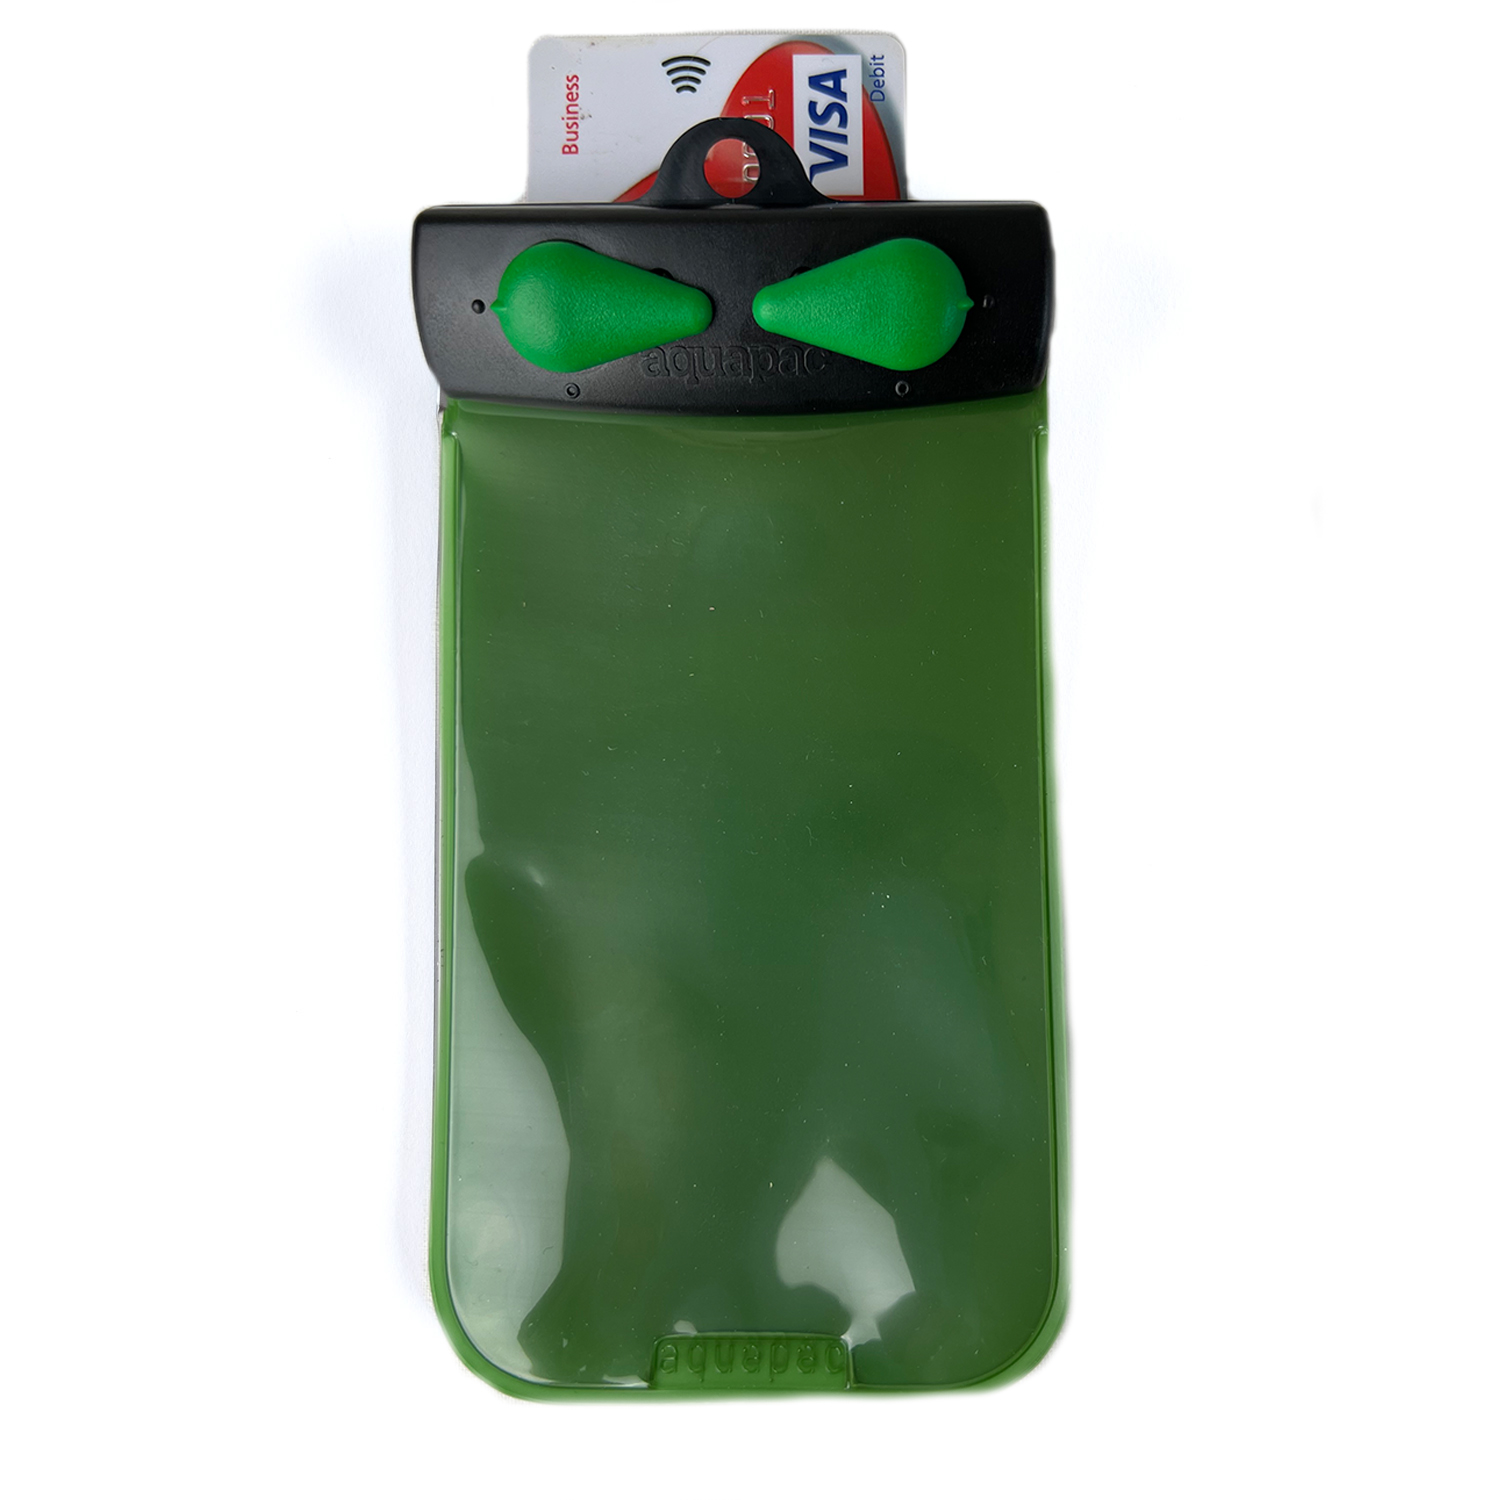 AQ602 waterproof keymaster green